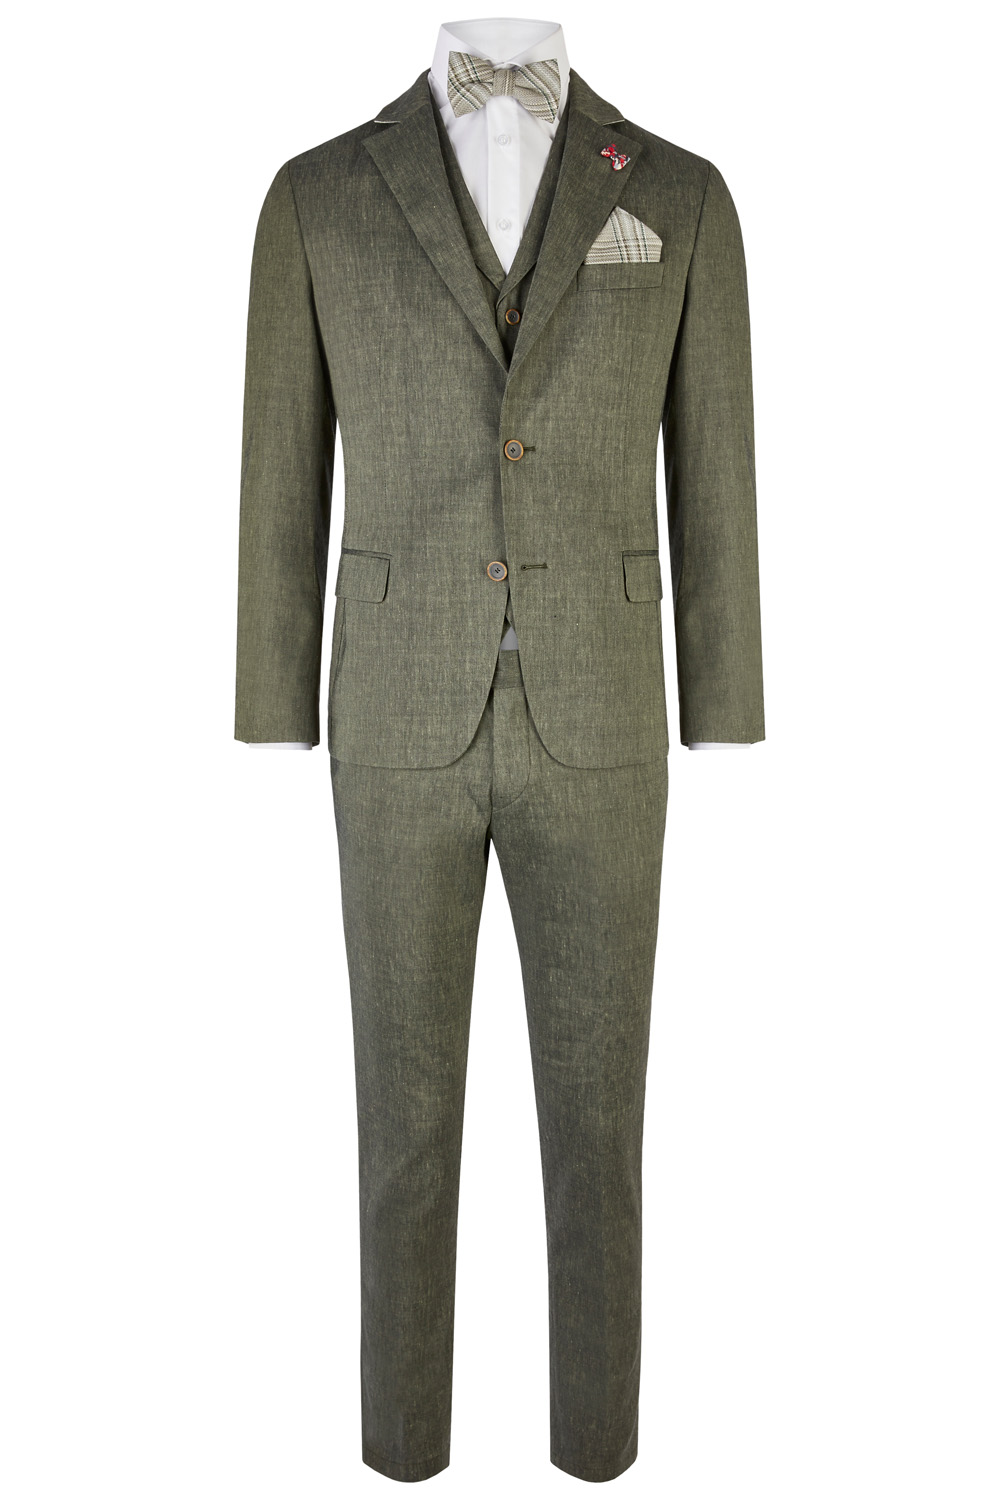 Dark Green Vintage 3 Piece Wedding Suit - Tom Murphy's Formal and Menswear